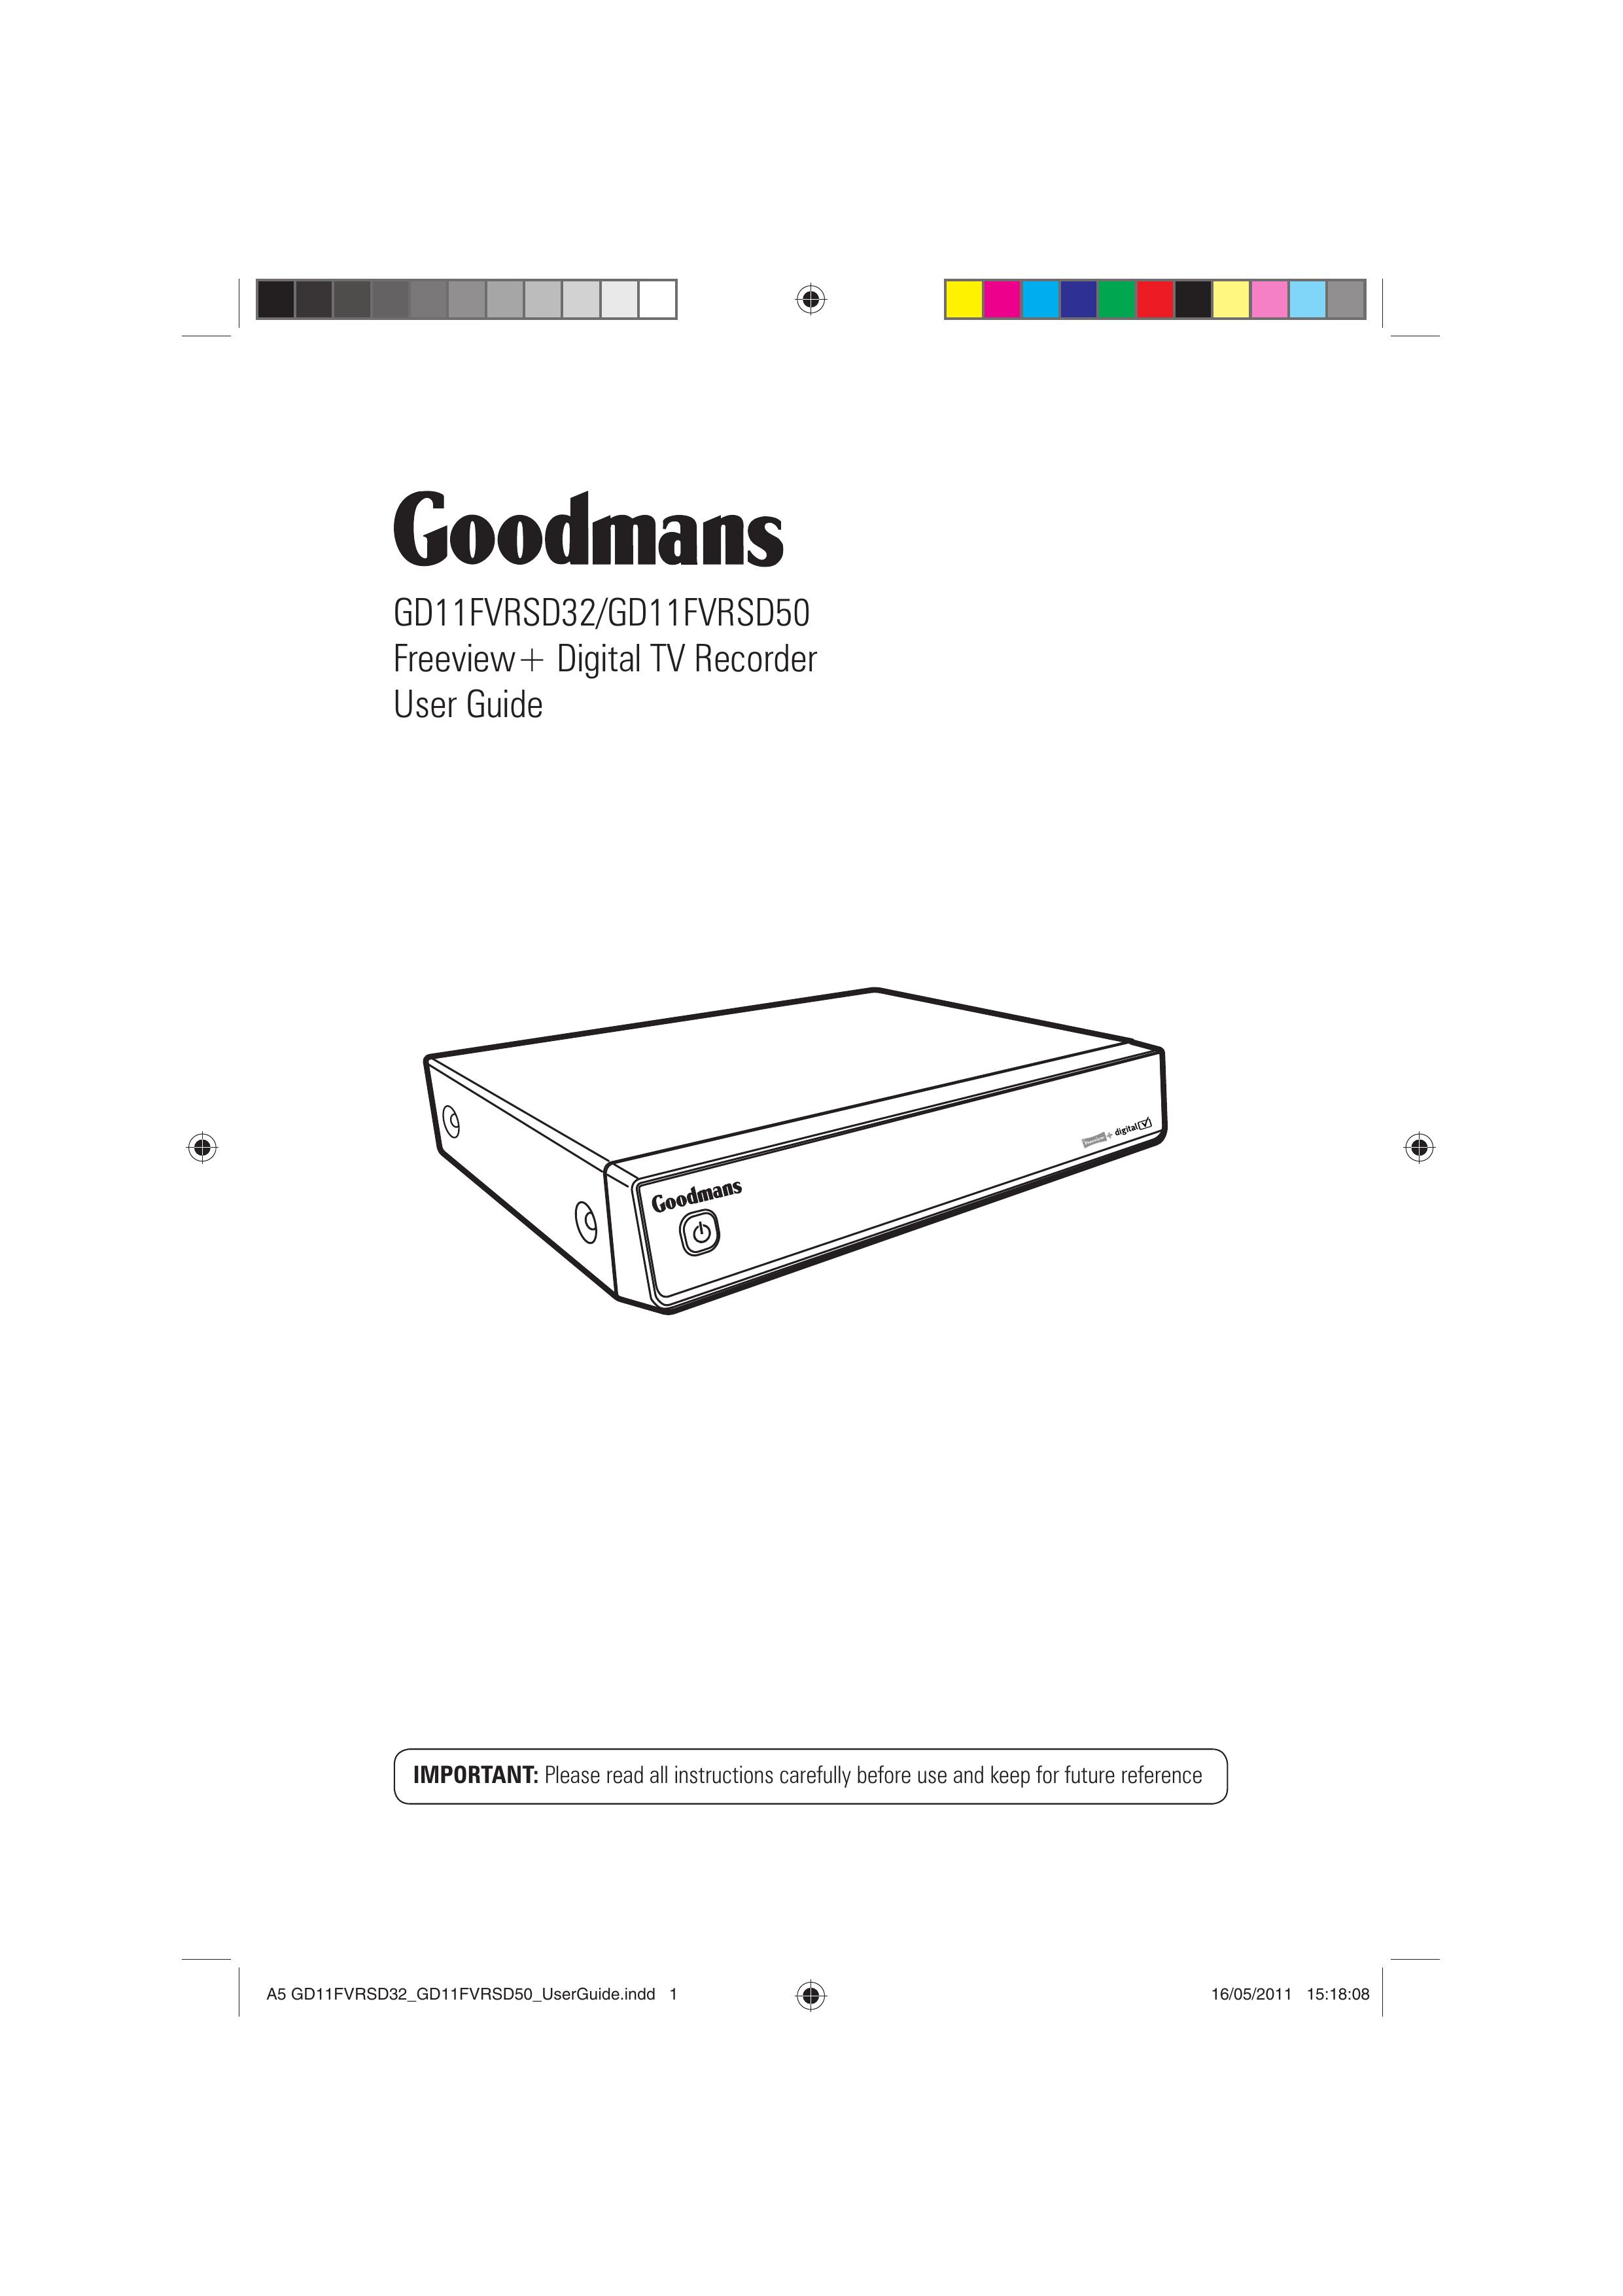 Goodmans GD11FVRSD32 Digital Camera User Manual